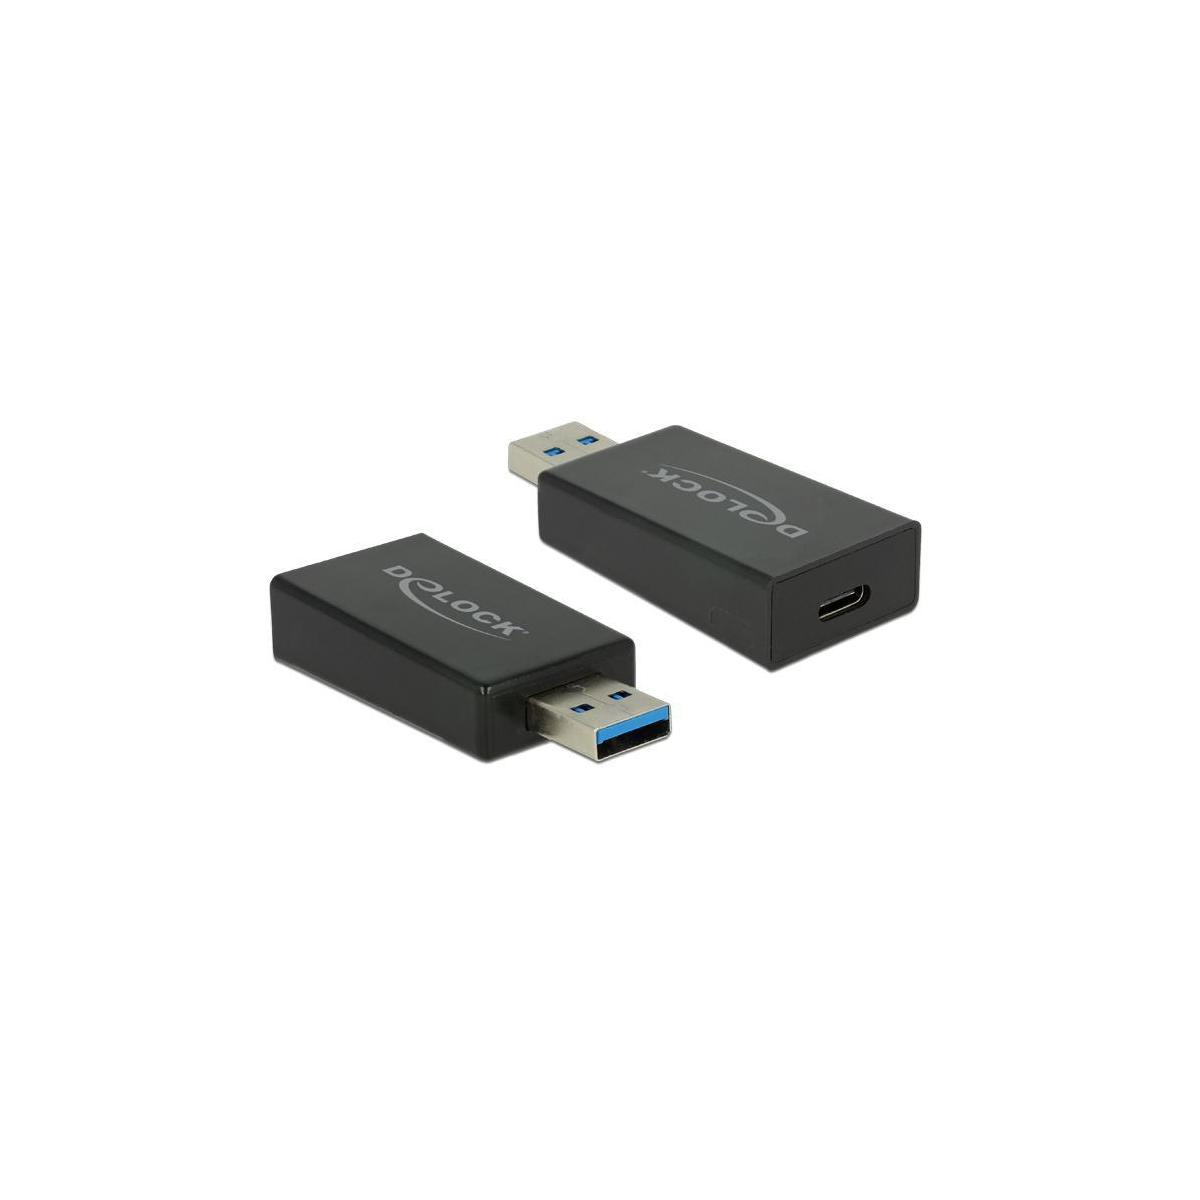 & USB DELOCK Zubehör 3.0 DELOCK Kabel & Adapter Type-C <gt/> Schwarz USB Adapter, & Peripheriegeräte A